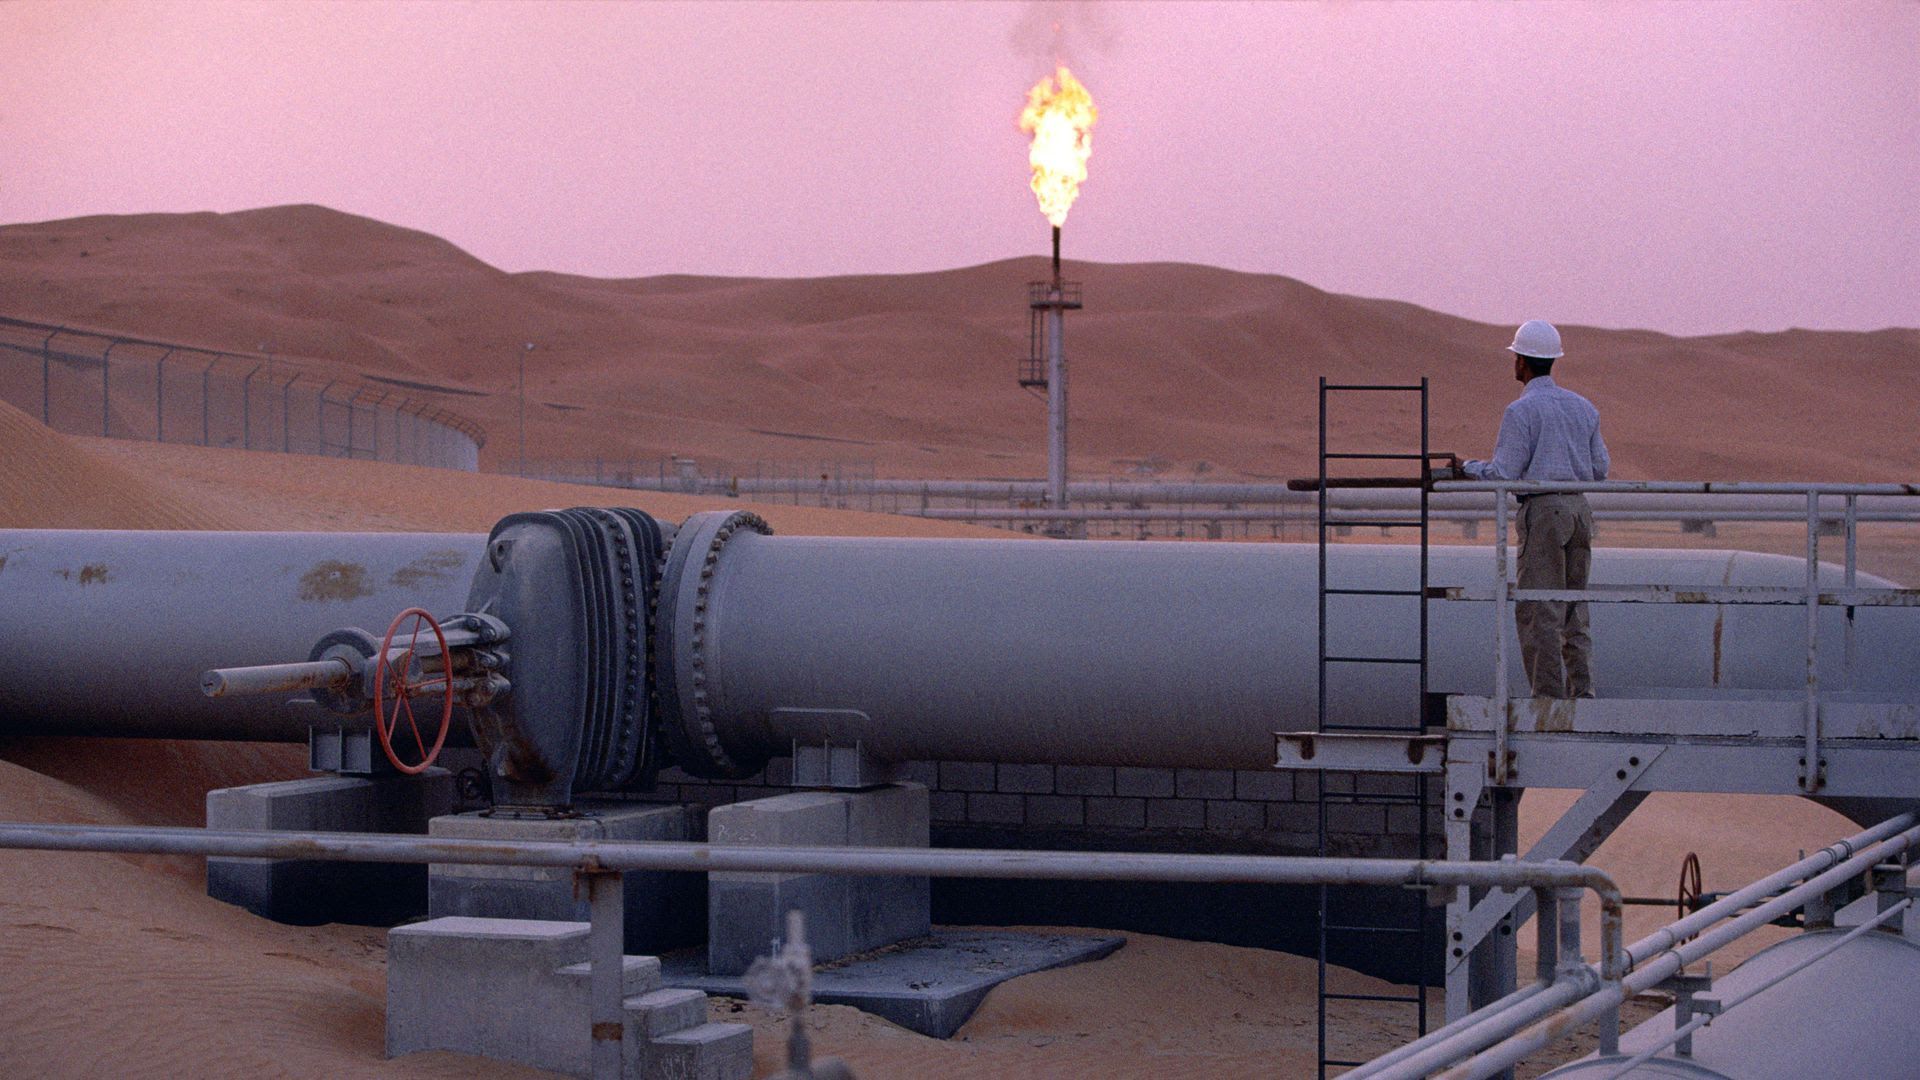 The Saudi Aramco oil field complex facilities at Shaybah in the Rub' al Khali.